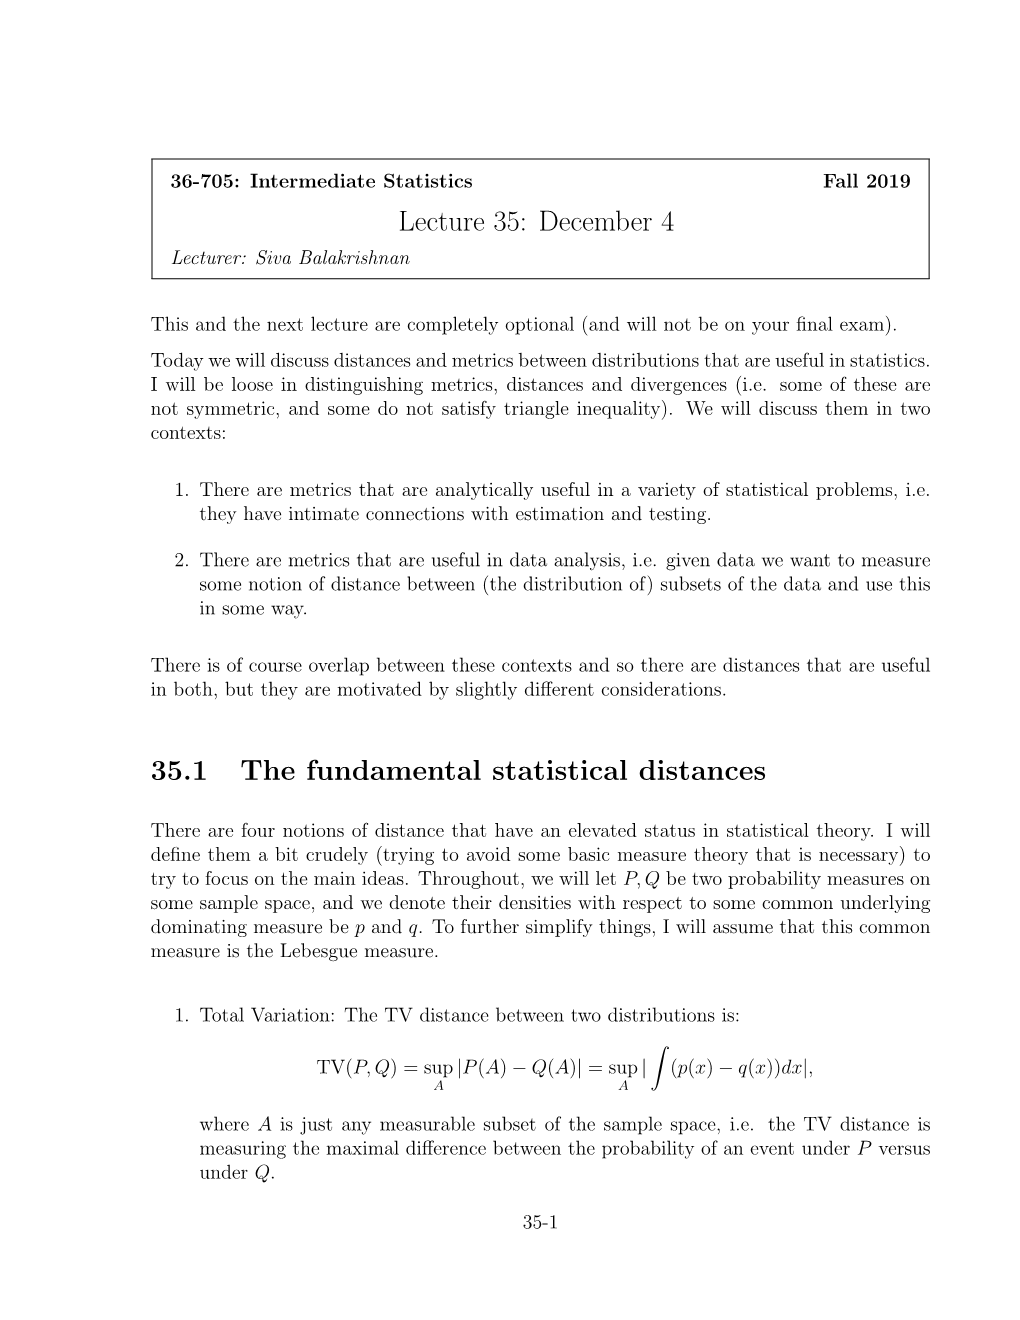 Lecture 35: December 4 35.1 the Fundamental Statistical Distances